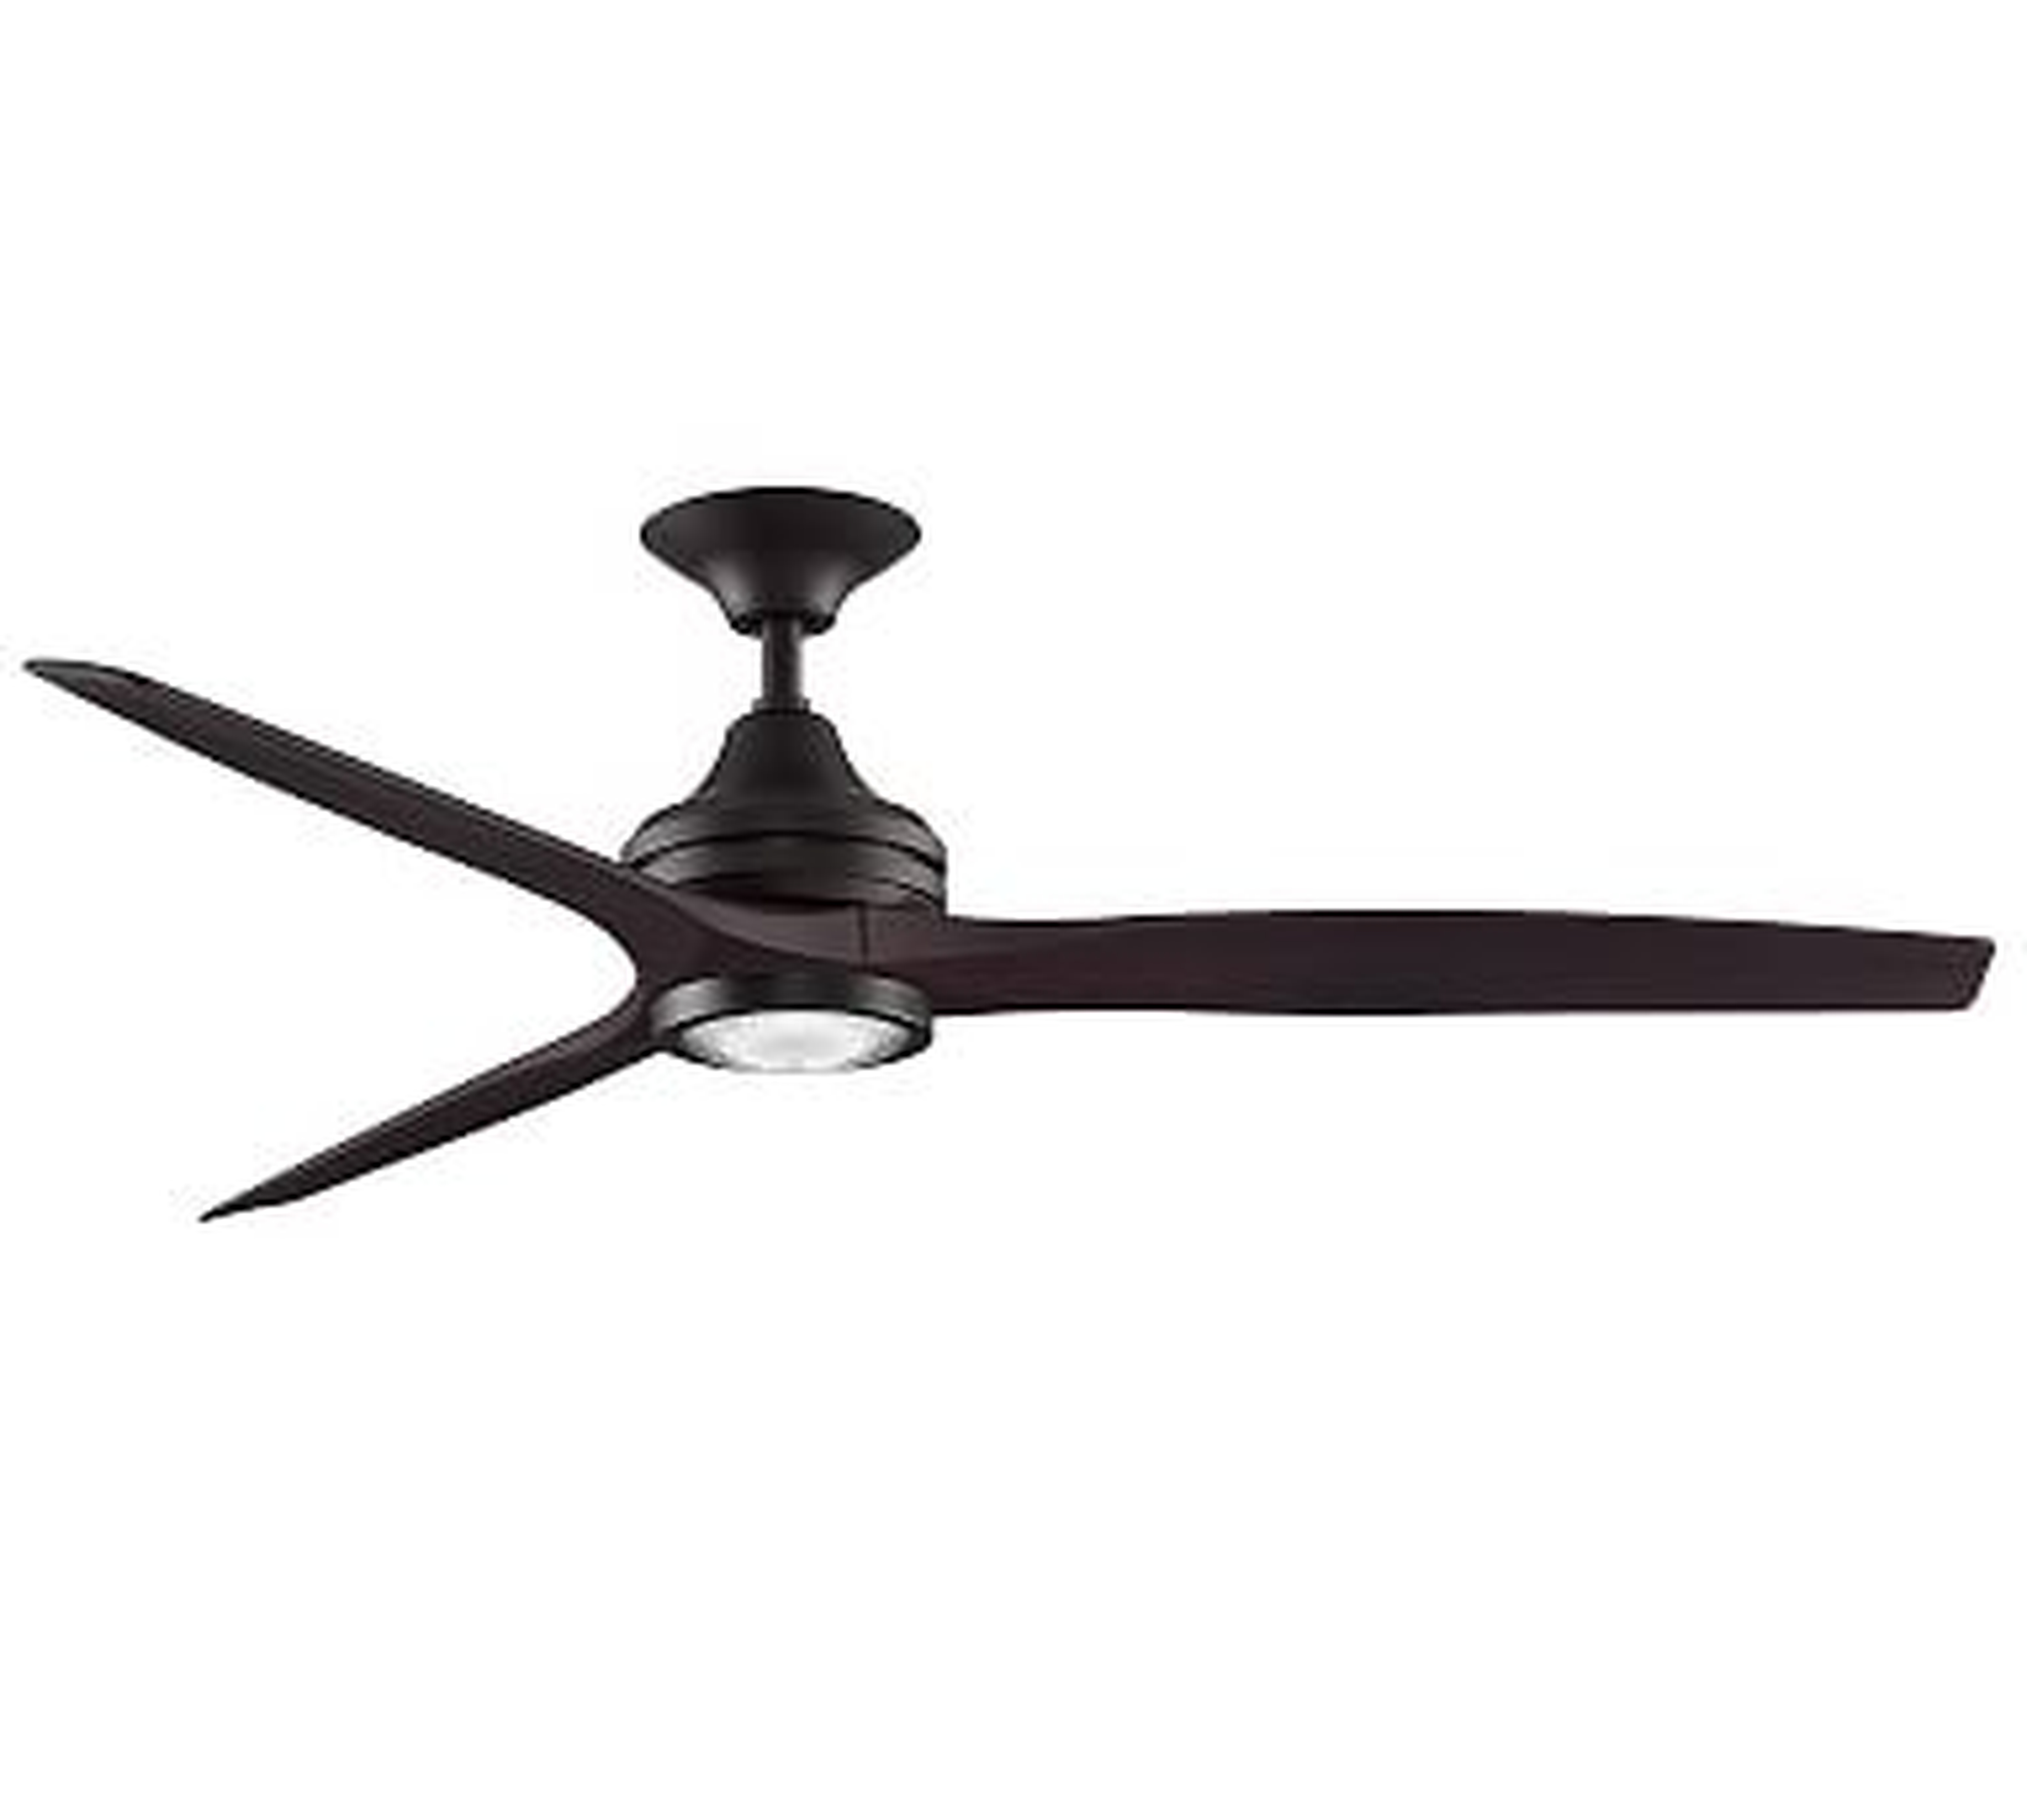 60" Spitfire Indoor/Outdoor Ceiling Fan with LED Kit, Dark Bronze Motor with Dark Walnut Blades - Pottery Barn